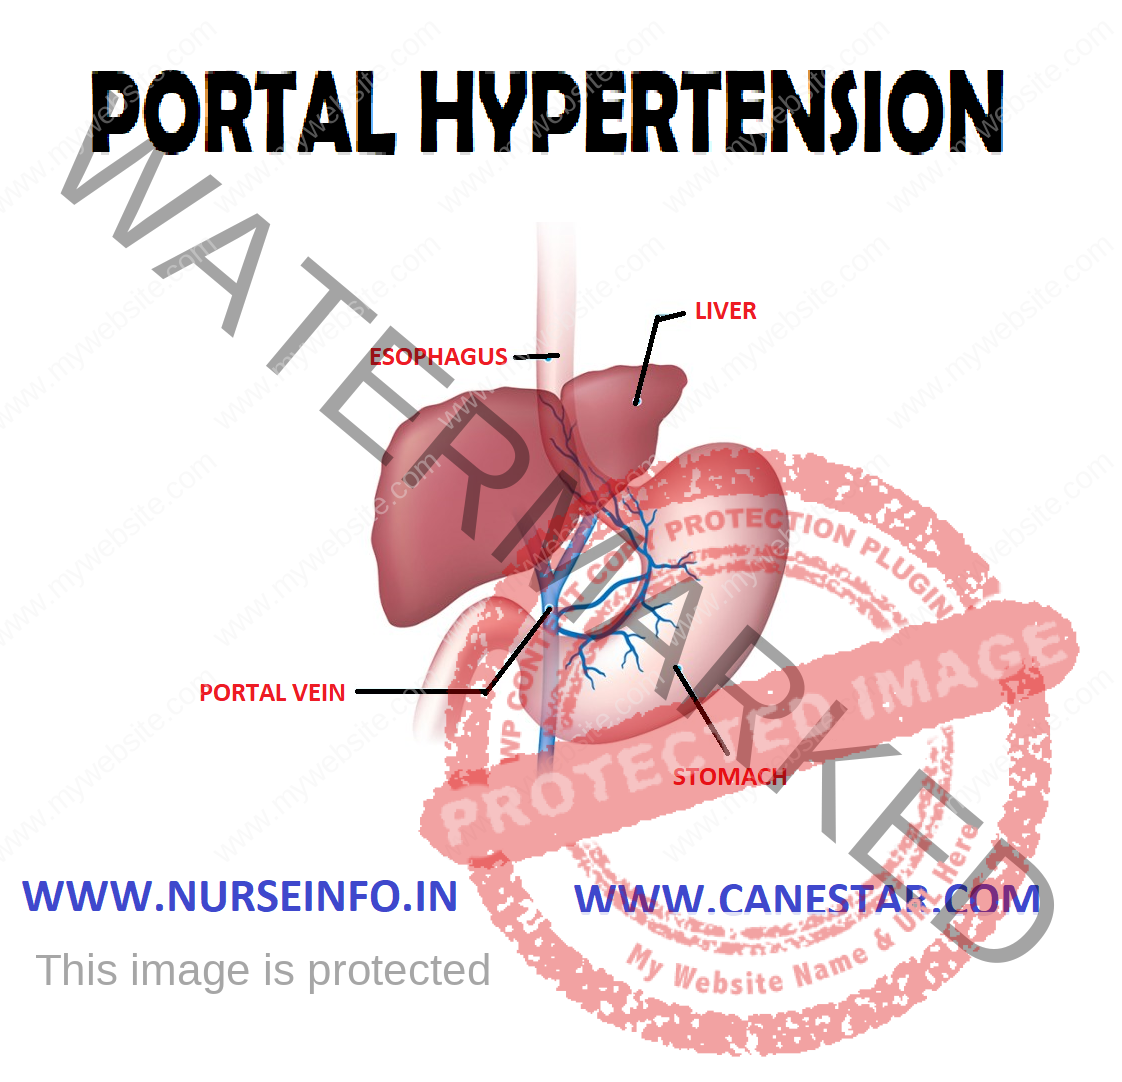 case presentation of portal hypertension